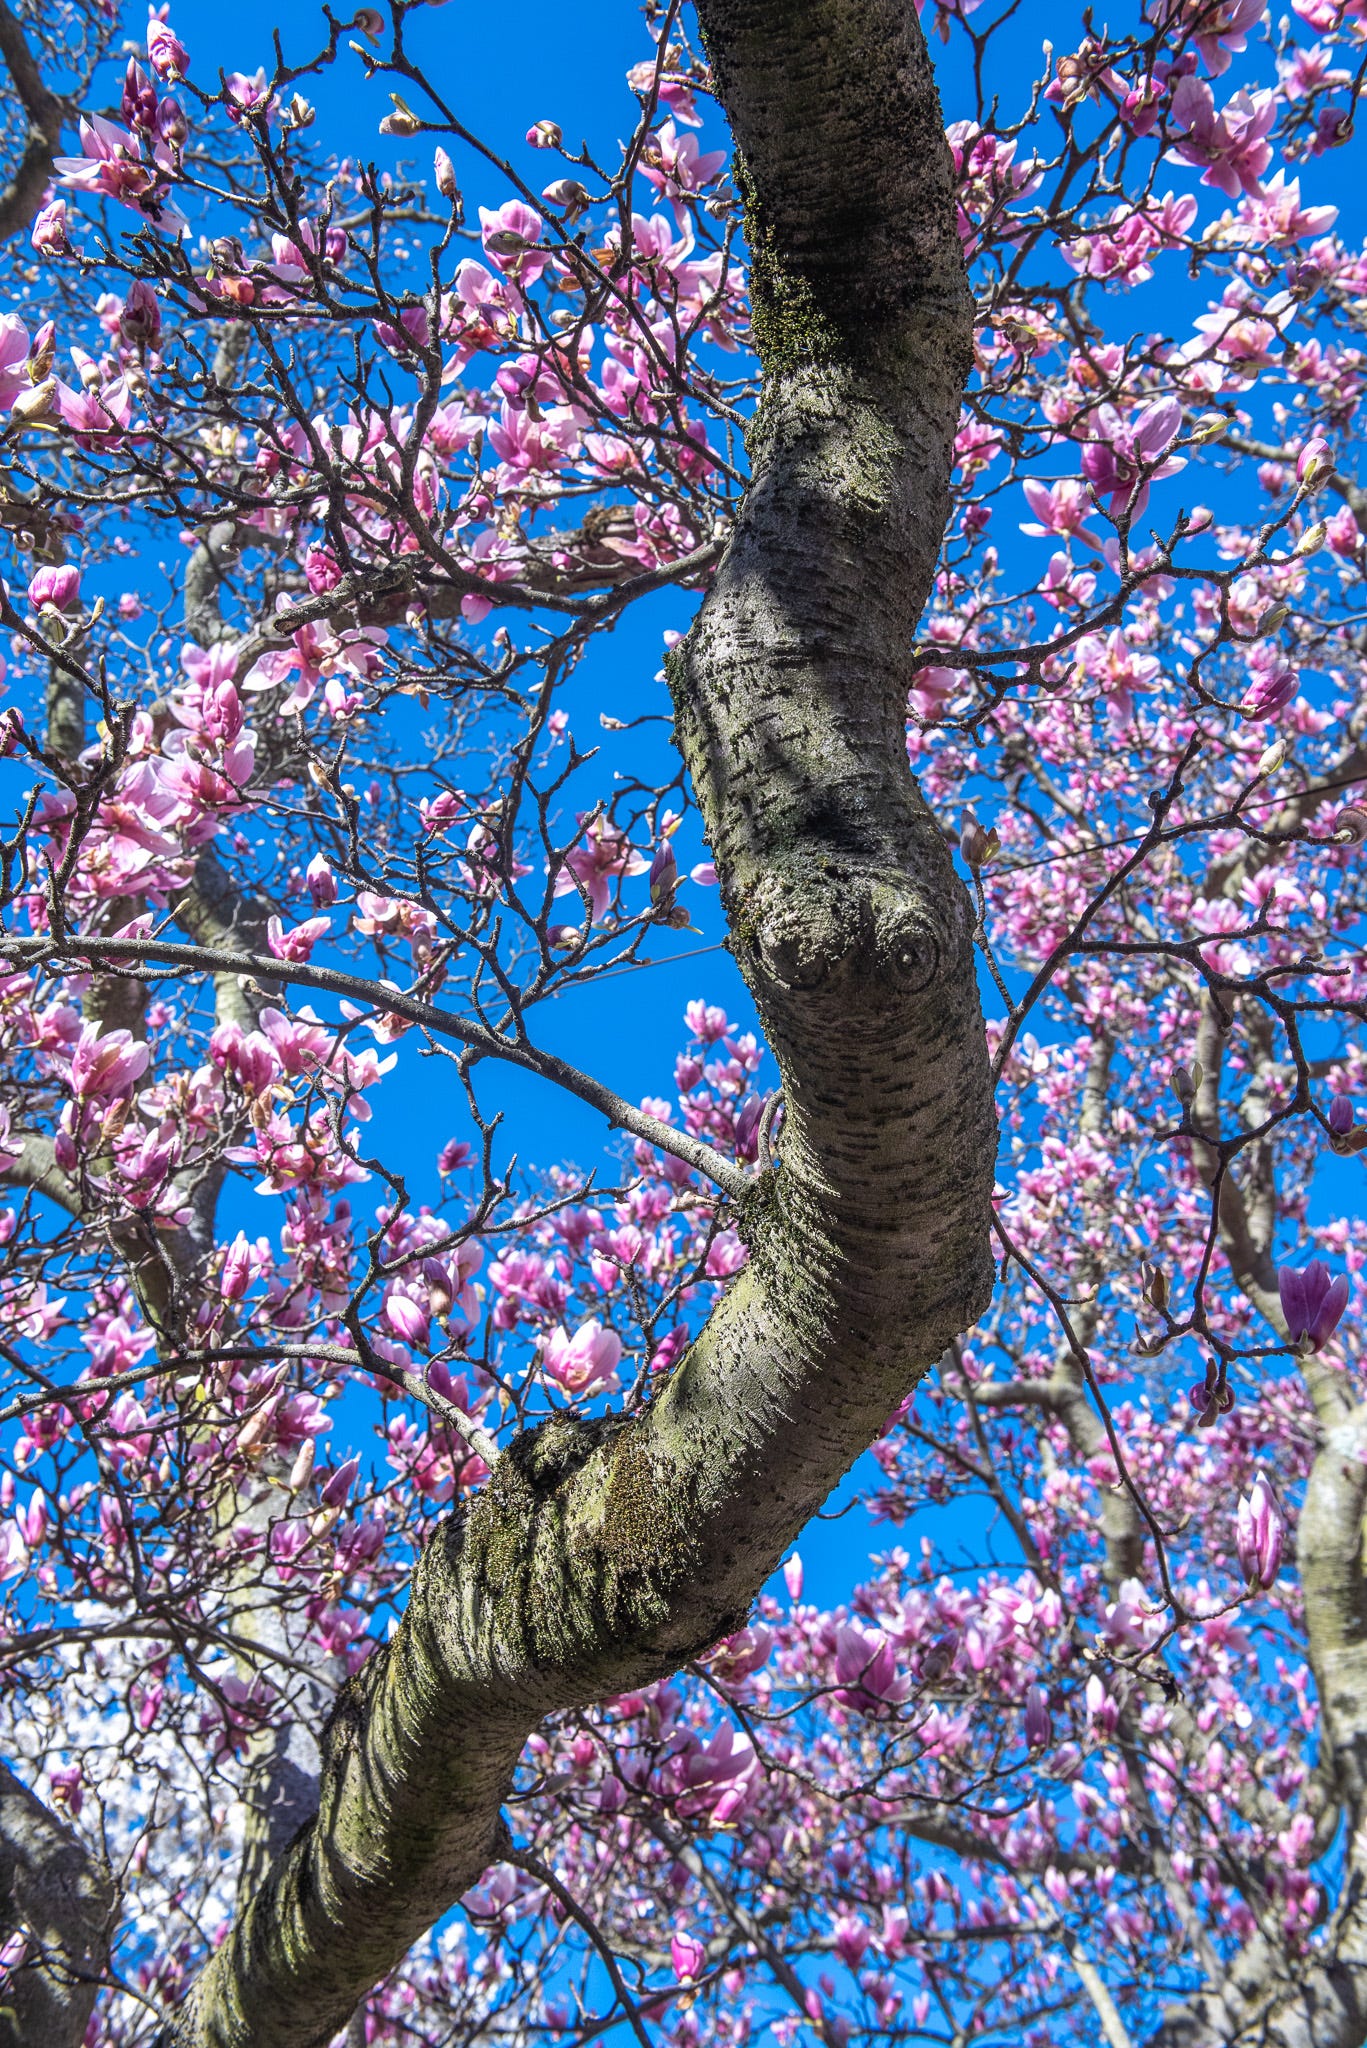 ID: Winding magnolia branch with abundant pink flowers